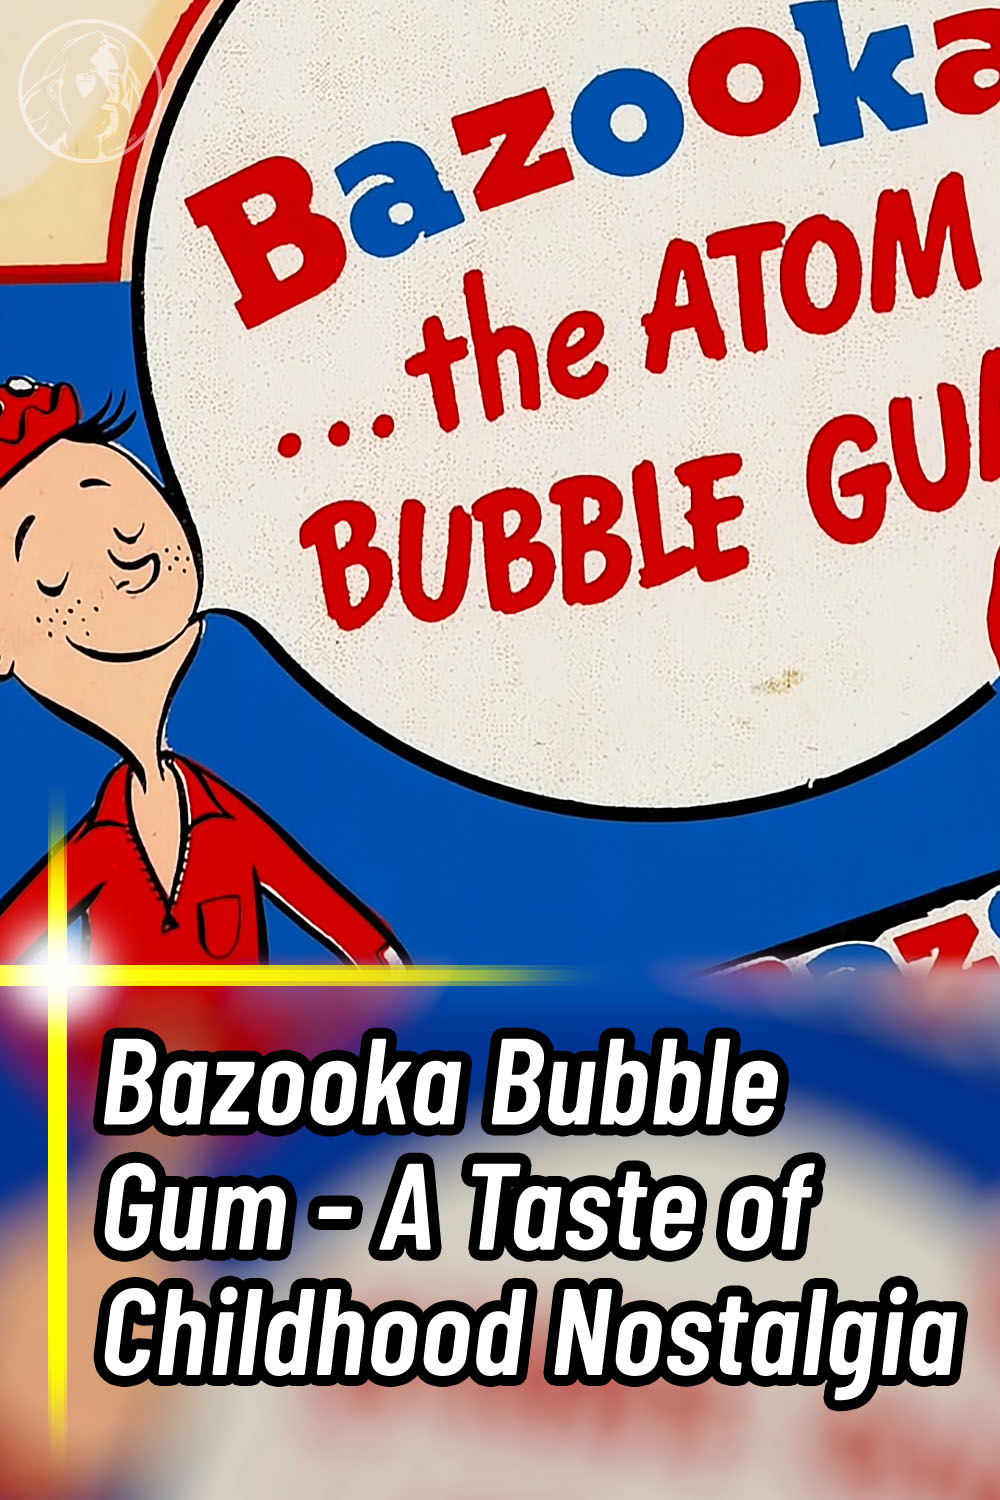 Bazooka Bubble Gum - A Taste of Childhood Nostalgia